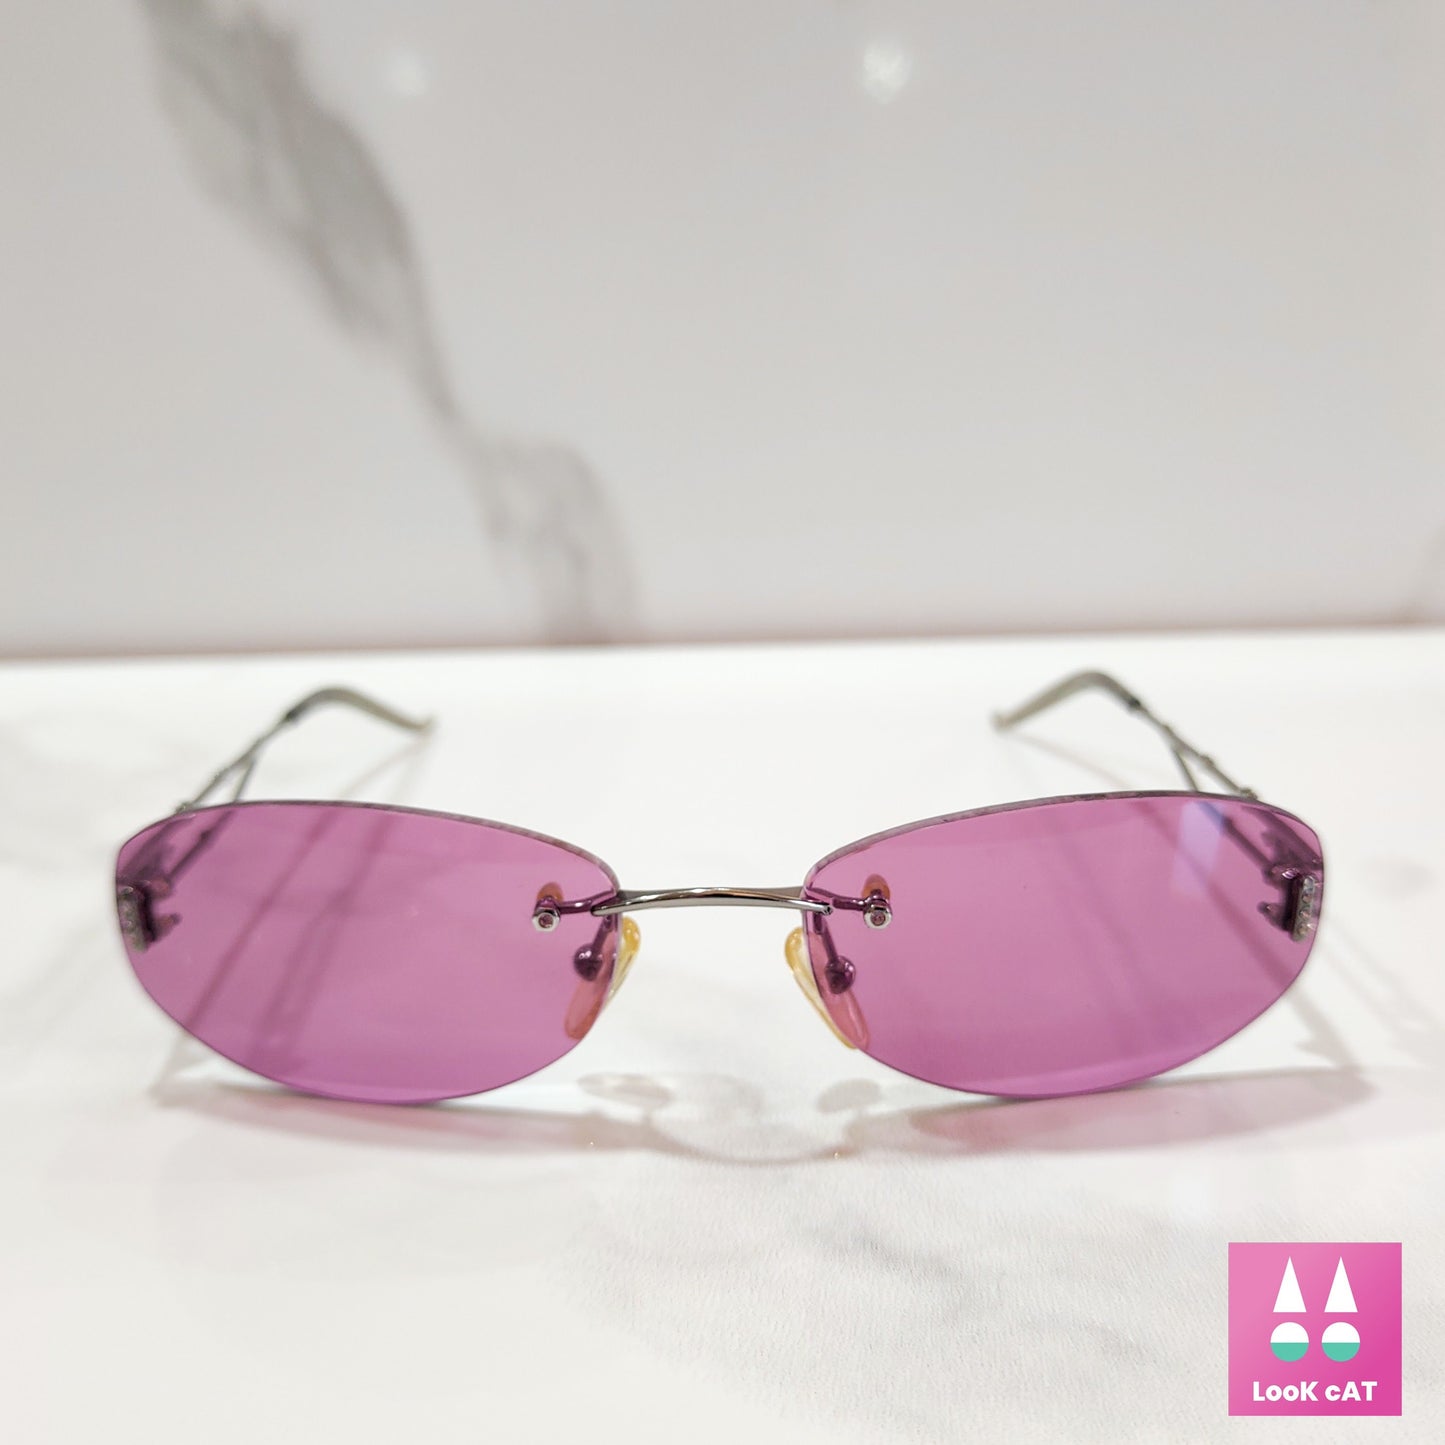 Christian Dior 3636 fiamma occhiali da sole vintage rosa rari occhiali gafas y2k occhiali senza montatura